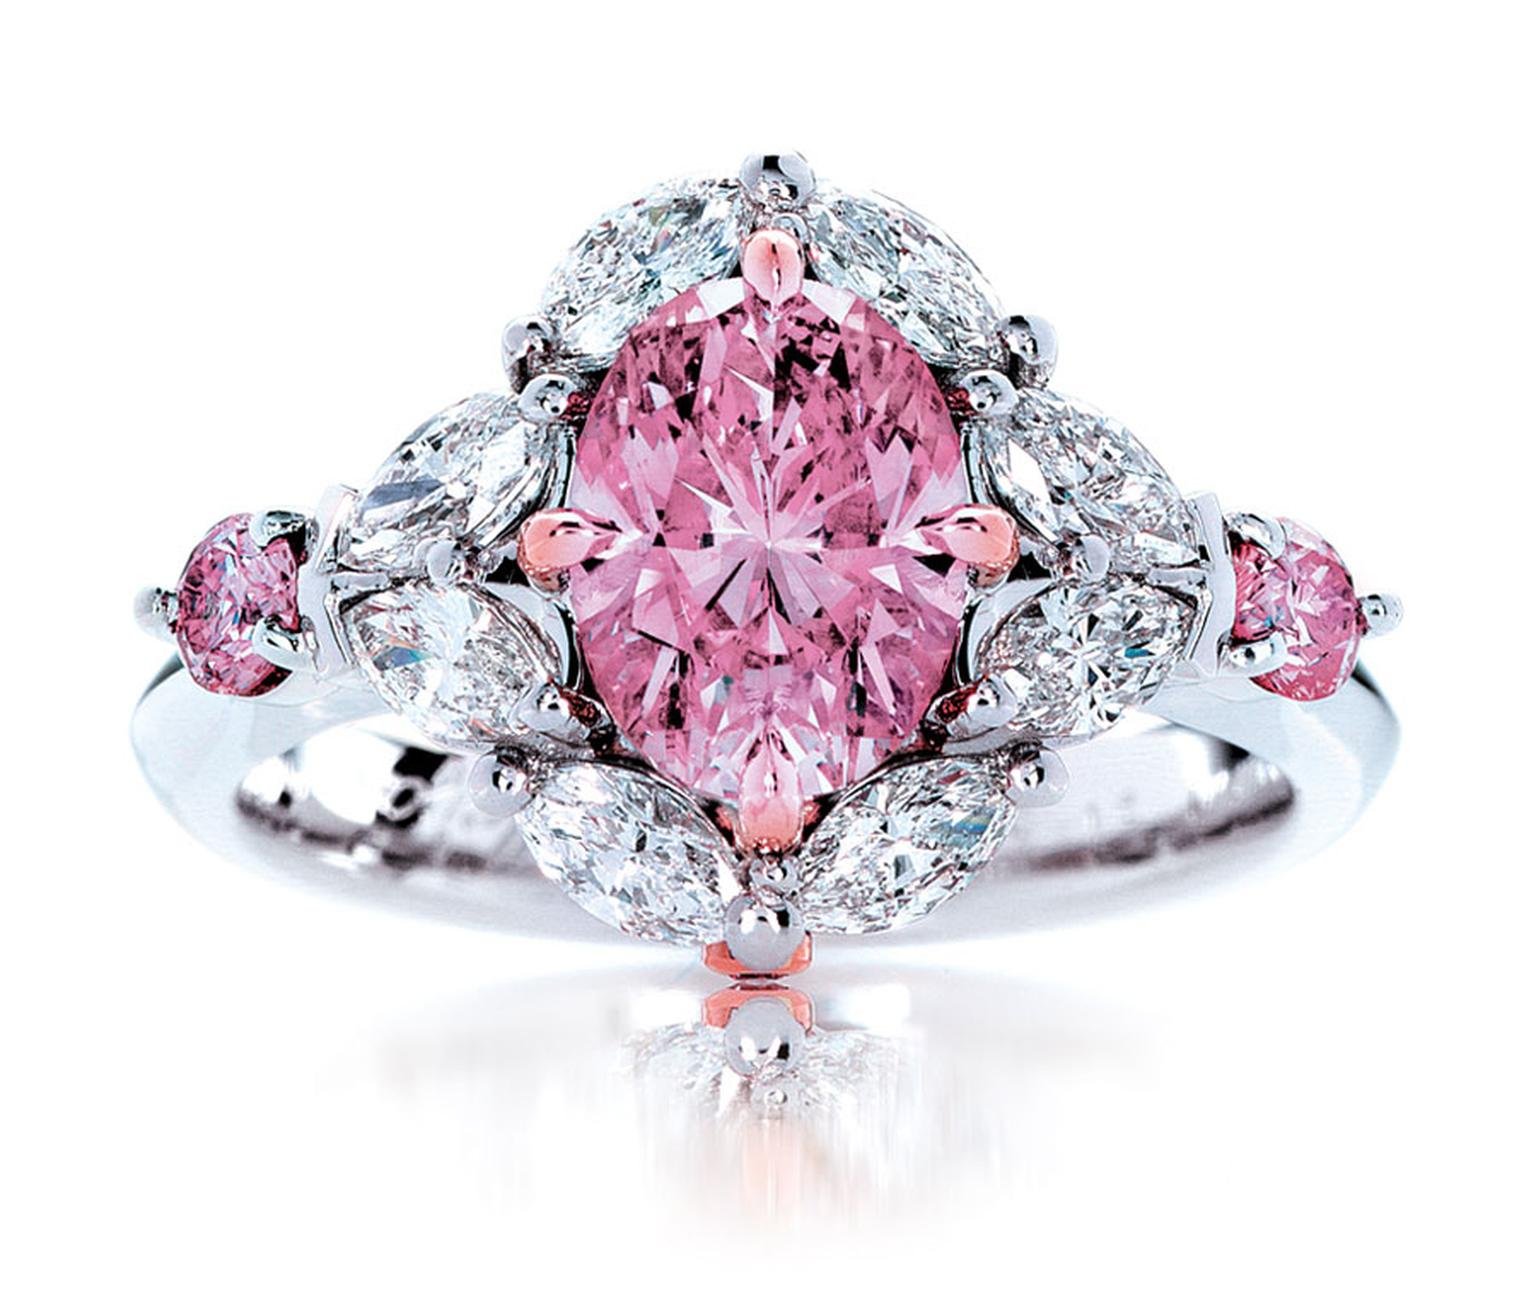 Украшения с бриллиантами first class diamonds. Кольцо Graff Pink Diamond. Розовый диамонд бриллианты.